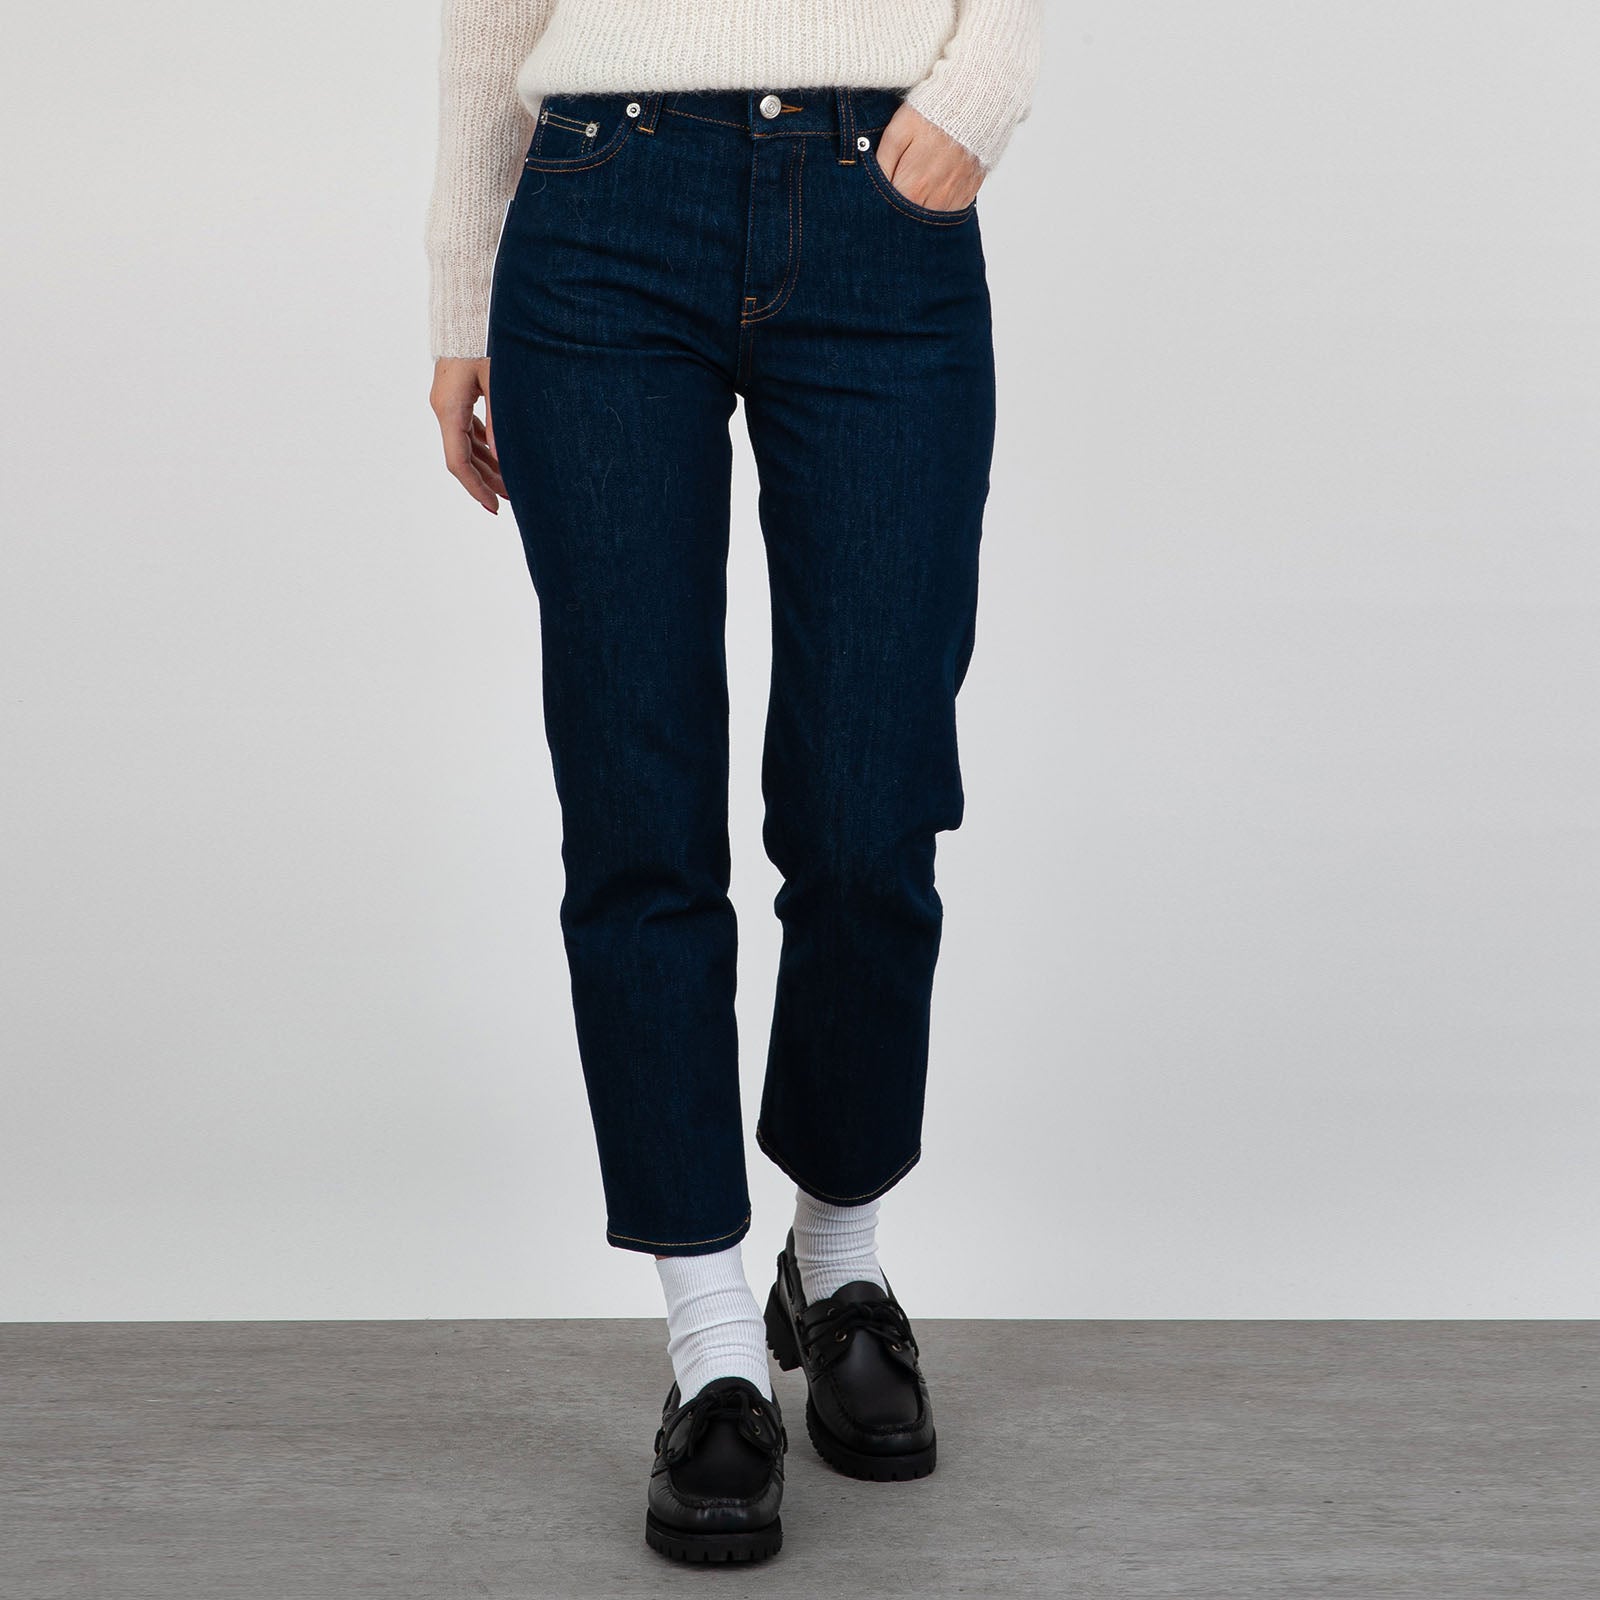 Adid Medium Blue Women's Jeans - 7